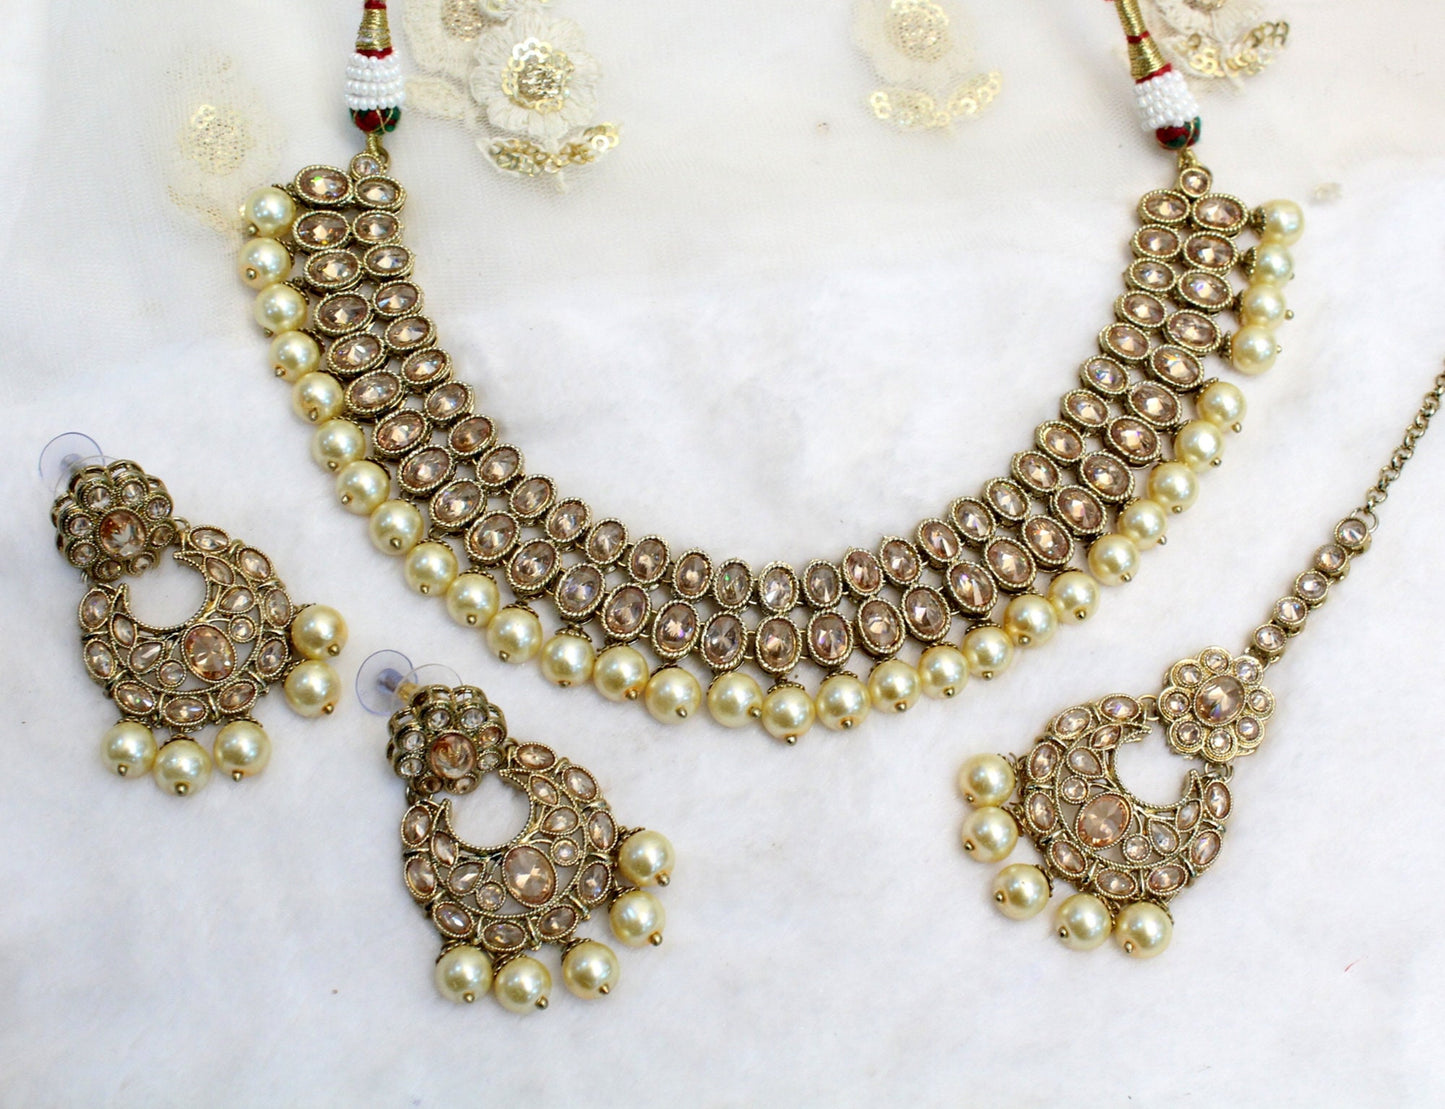 Ivory Indian  Jewellery/Mehndi polish dark gold necklace Set/Bollywood Gold Indian Jewelry Jewellery fairlawn Set /Bridesmaid sets